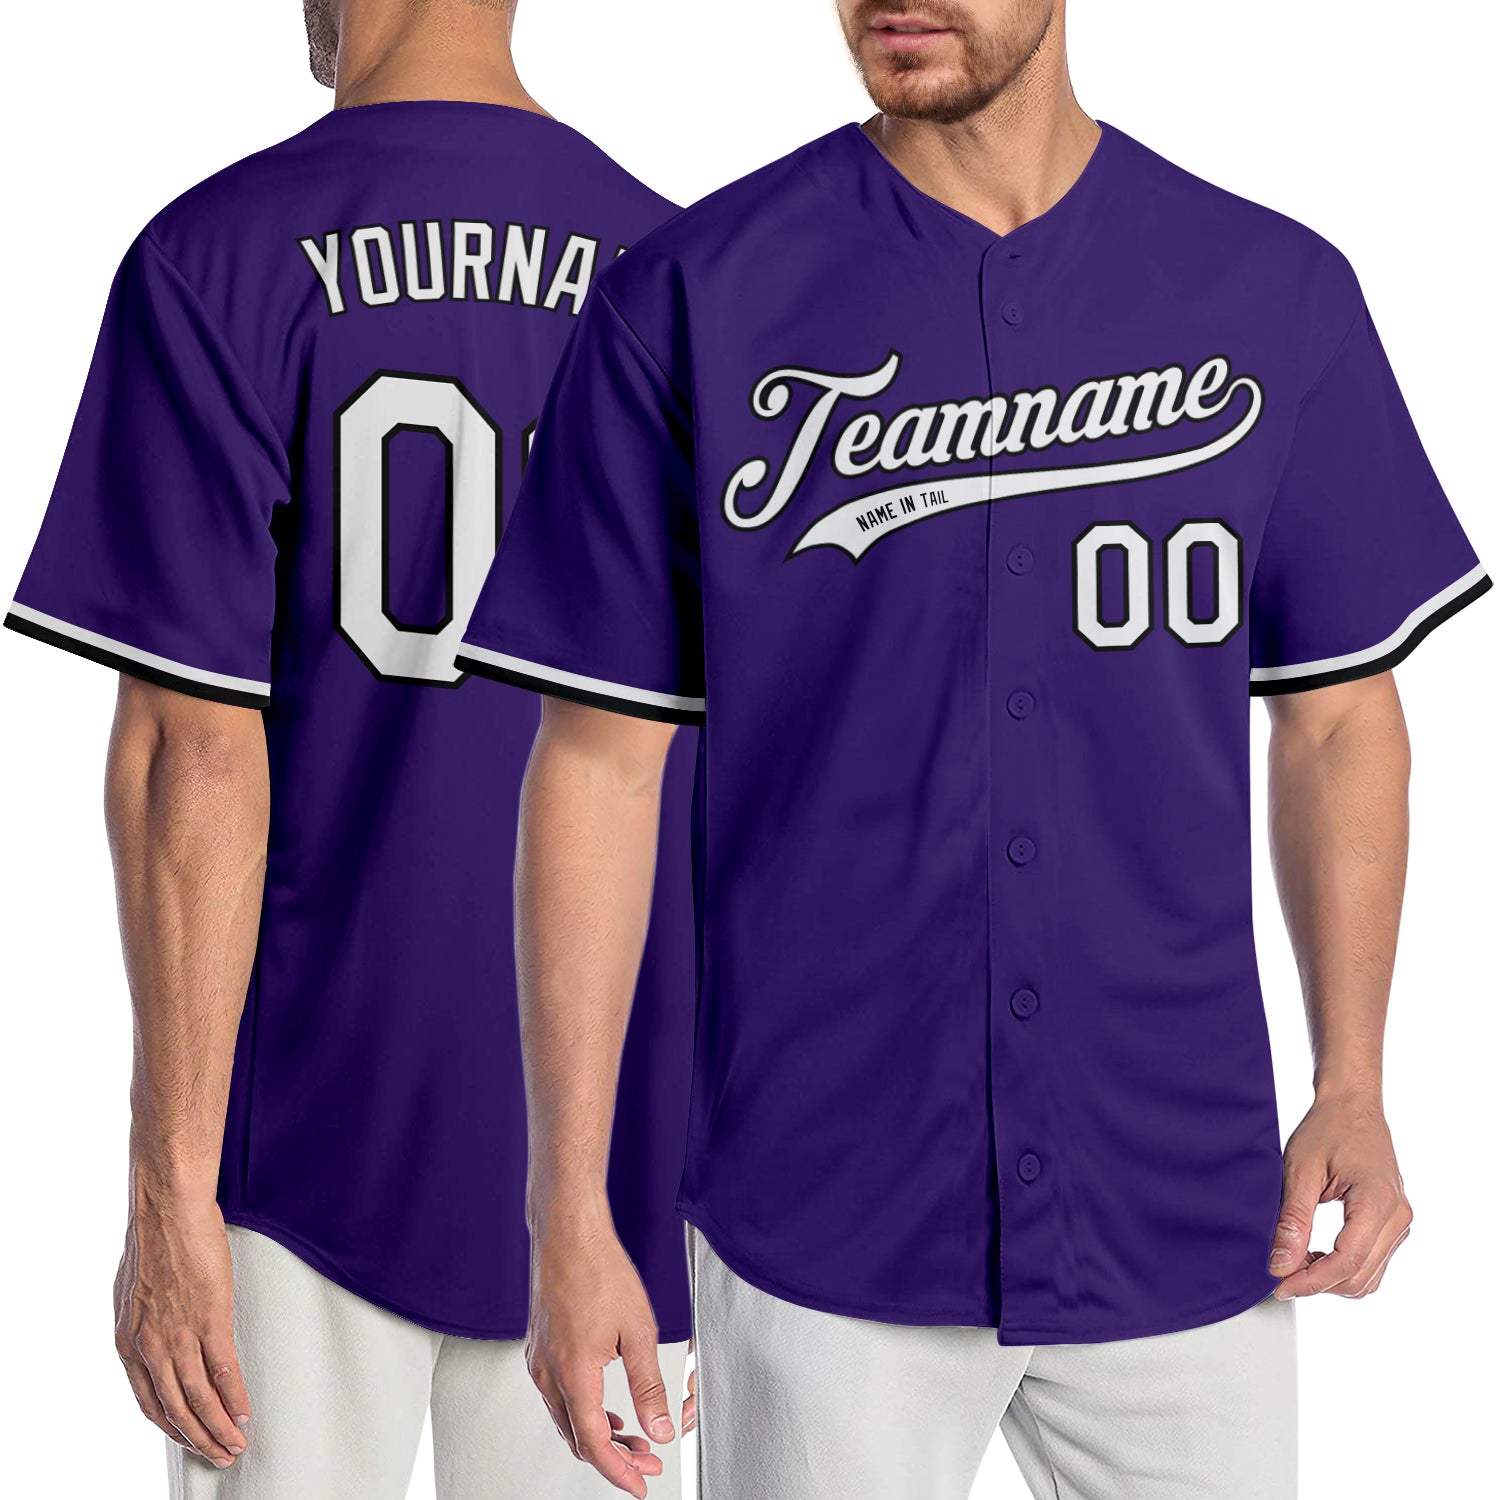 all purple baseball uniforms